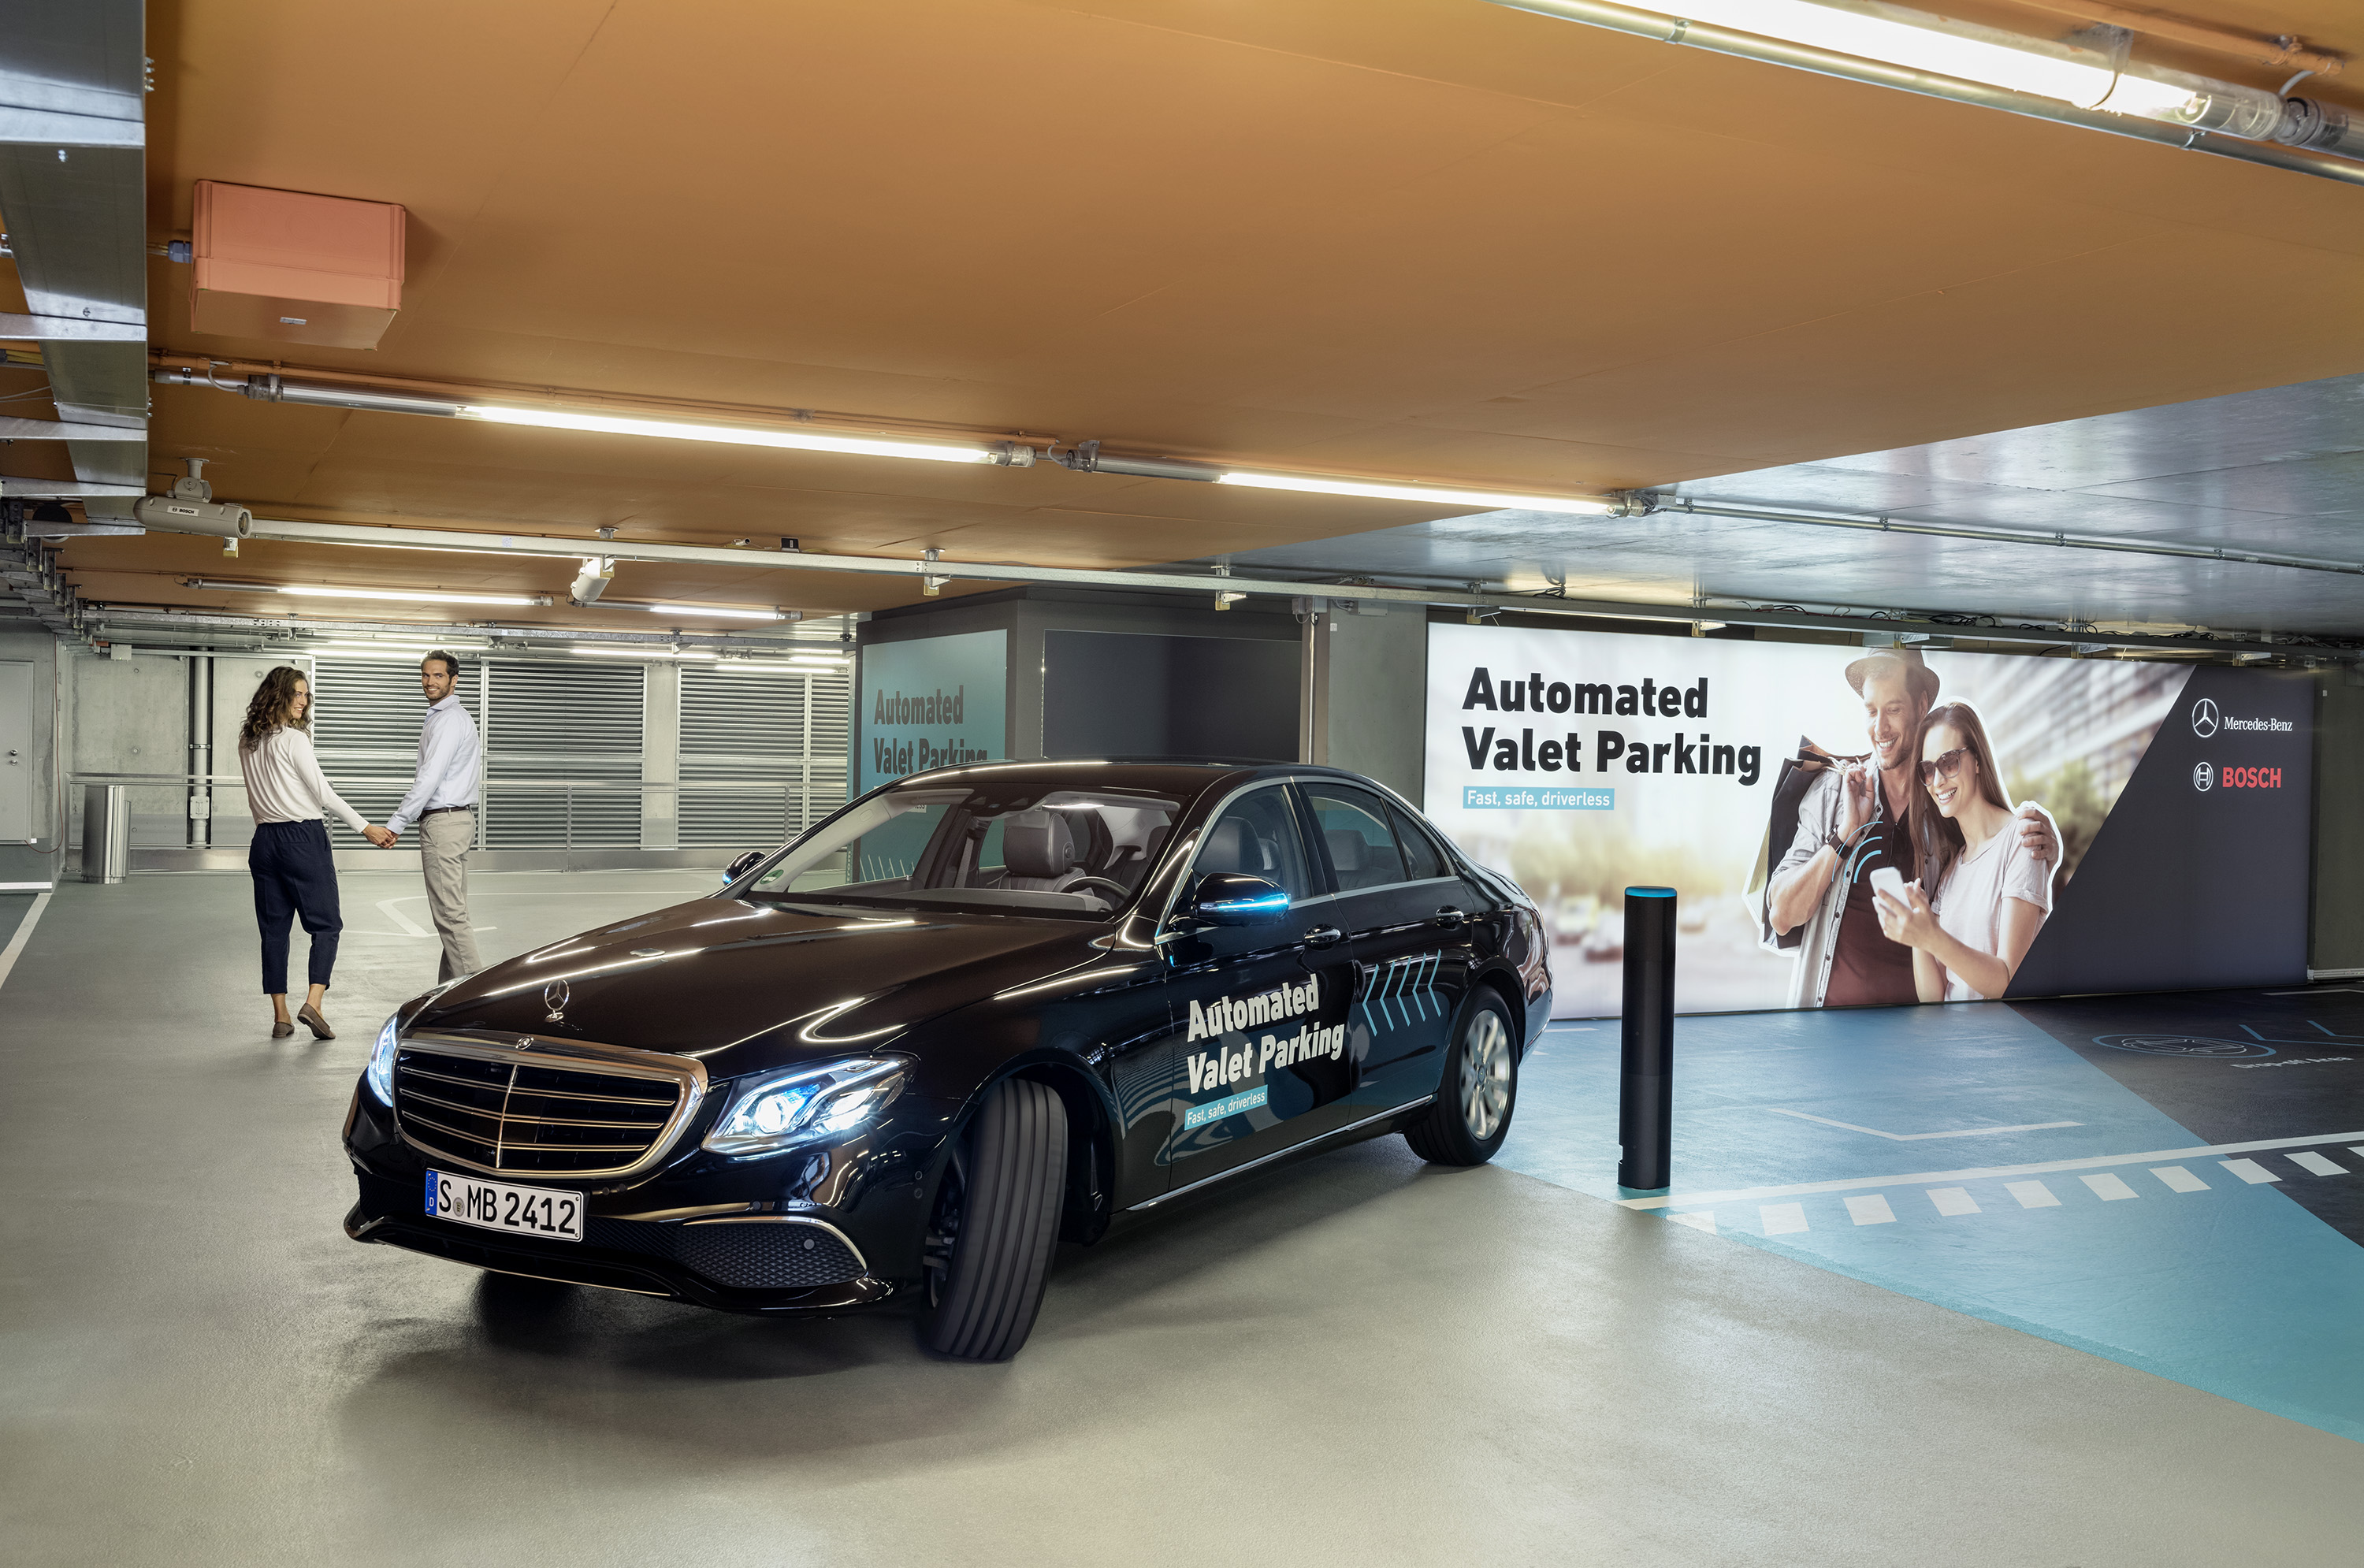 Automated Valet Parking at the Mercedes-Benz Museum parking garage in Stuttgart